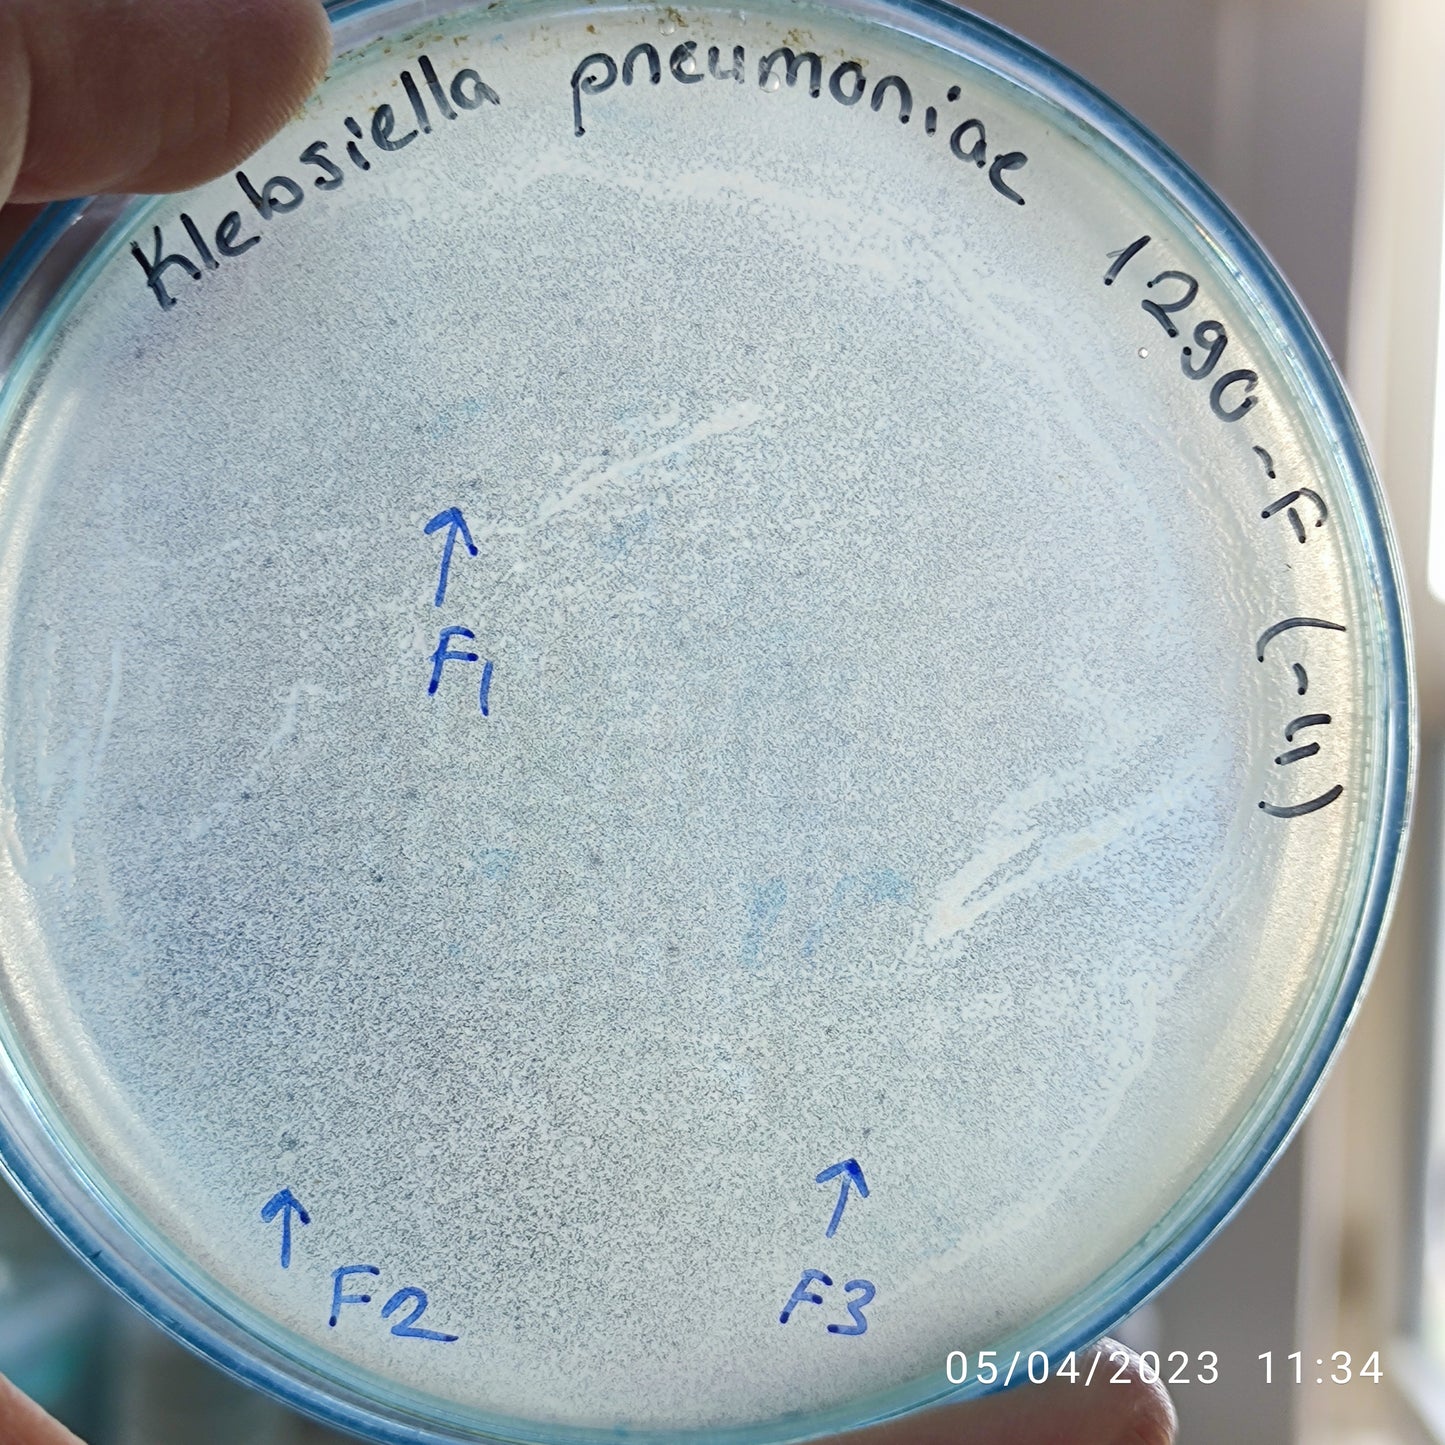 Klebsiella pneumoniae bacteriophage 181290F